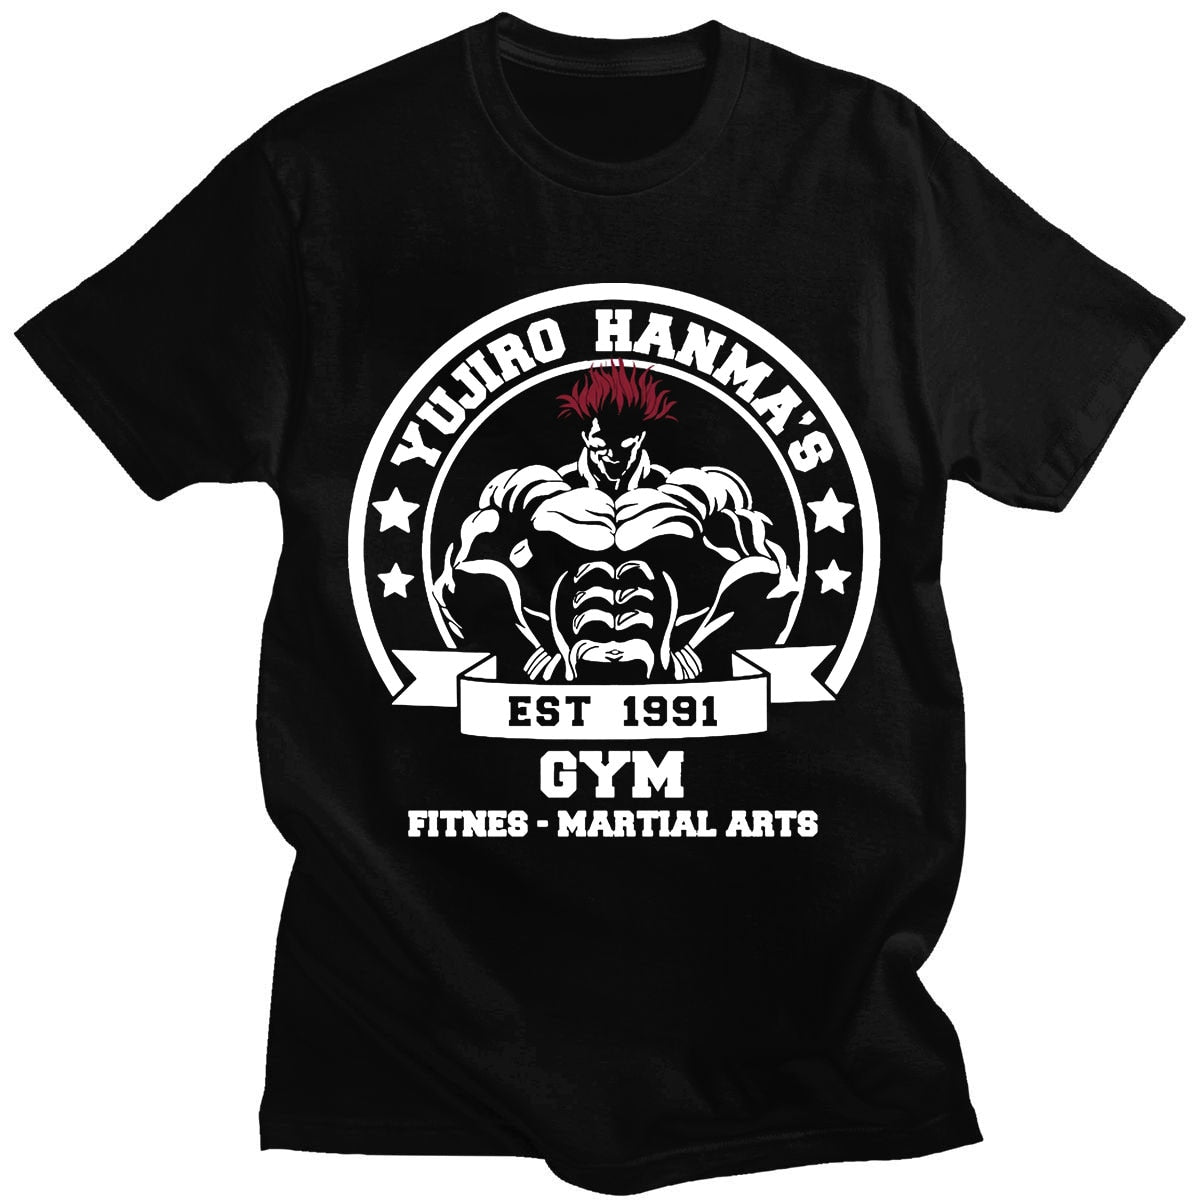 The Ogre's Gym T-Shirt